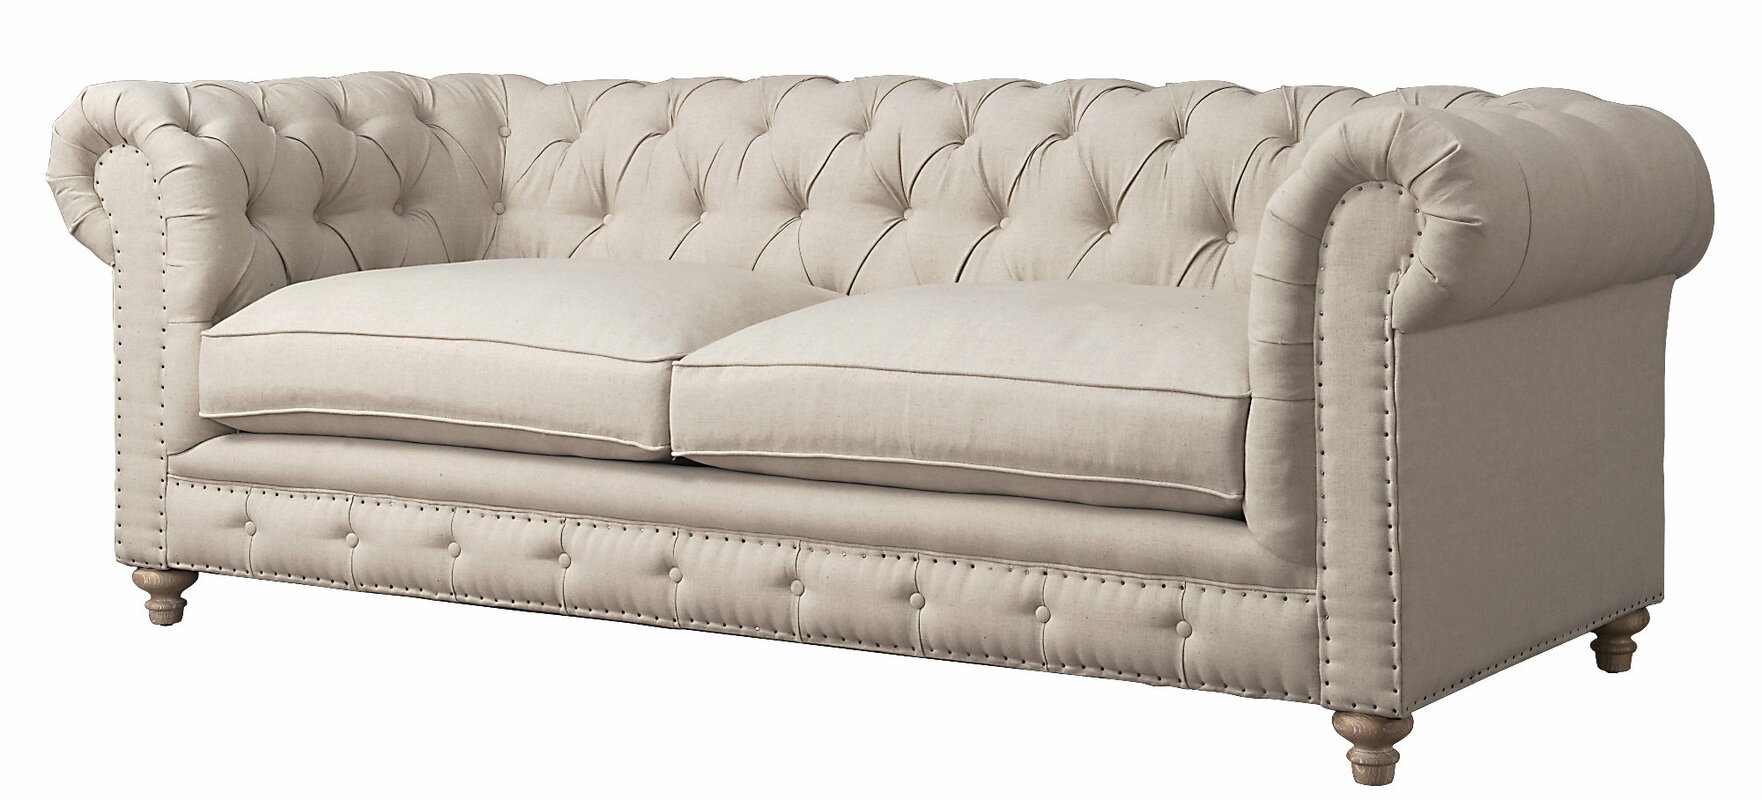 Beige Chesterfield Sofa